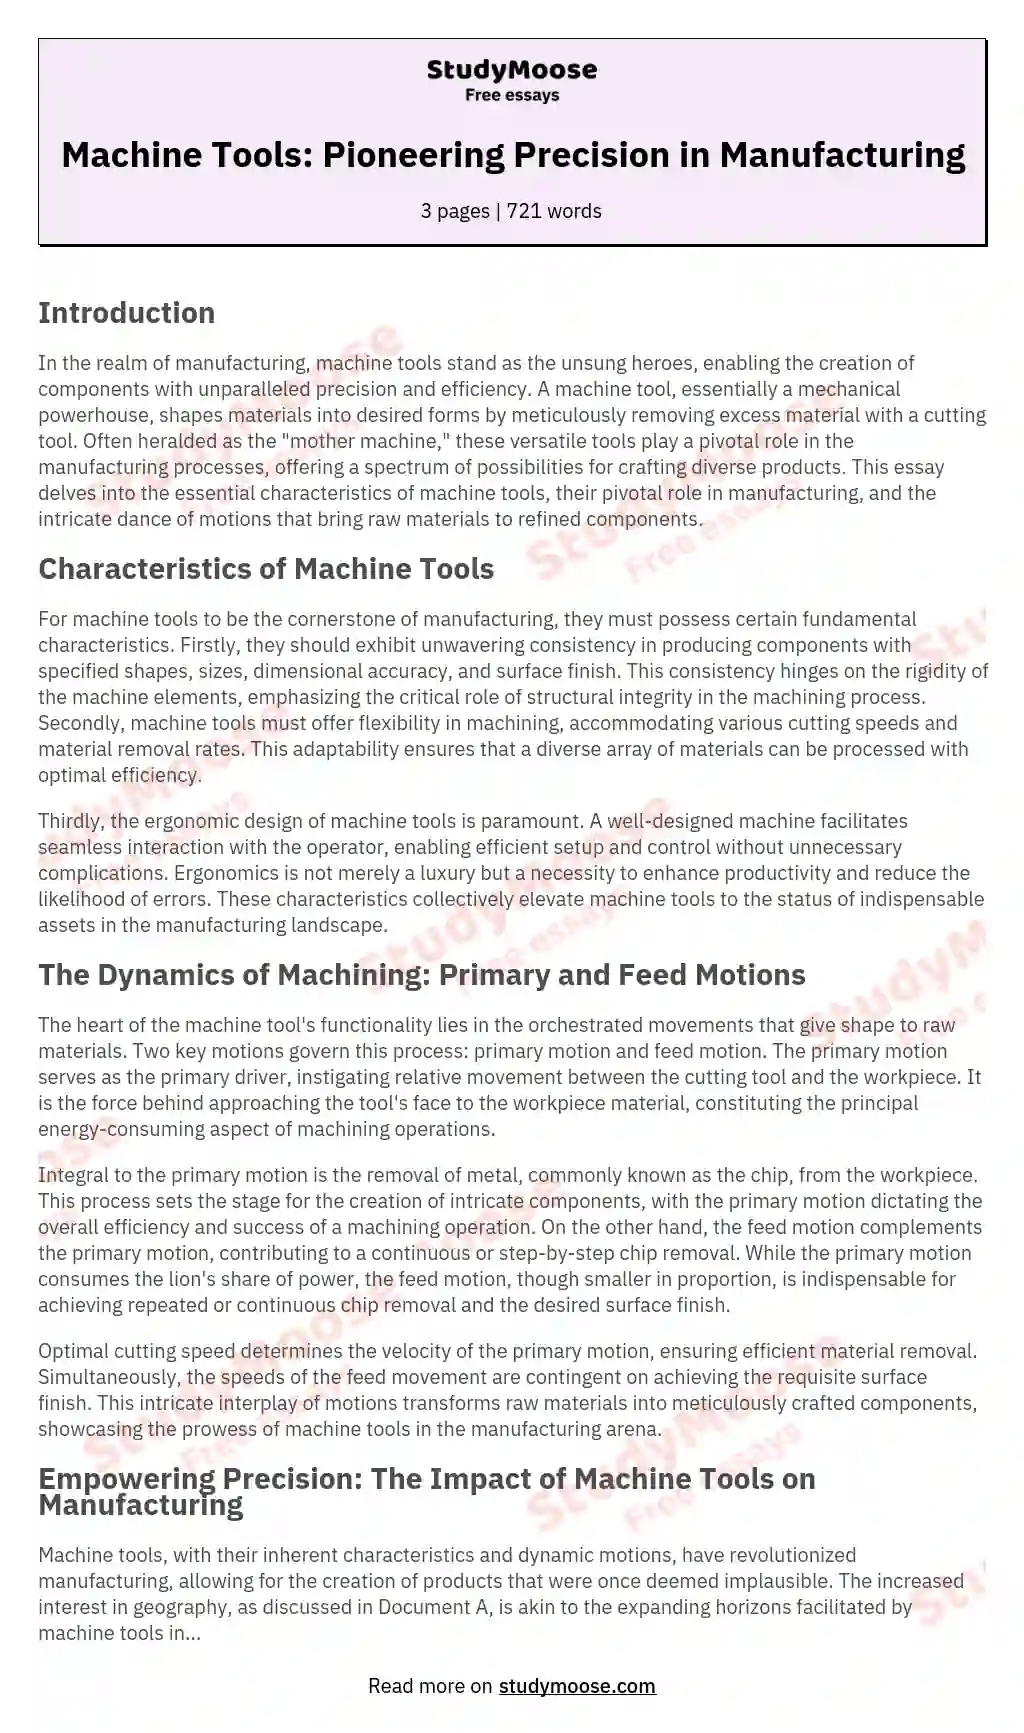 Machine Tools: Pioneering Precision in Manufacturing essay